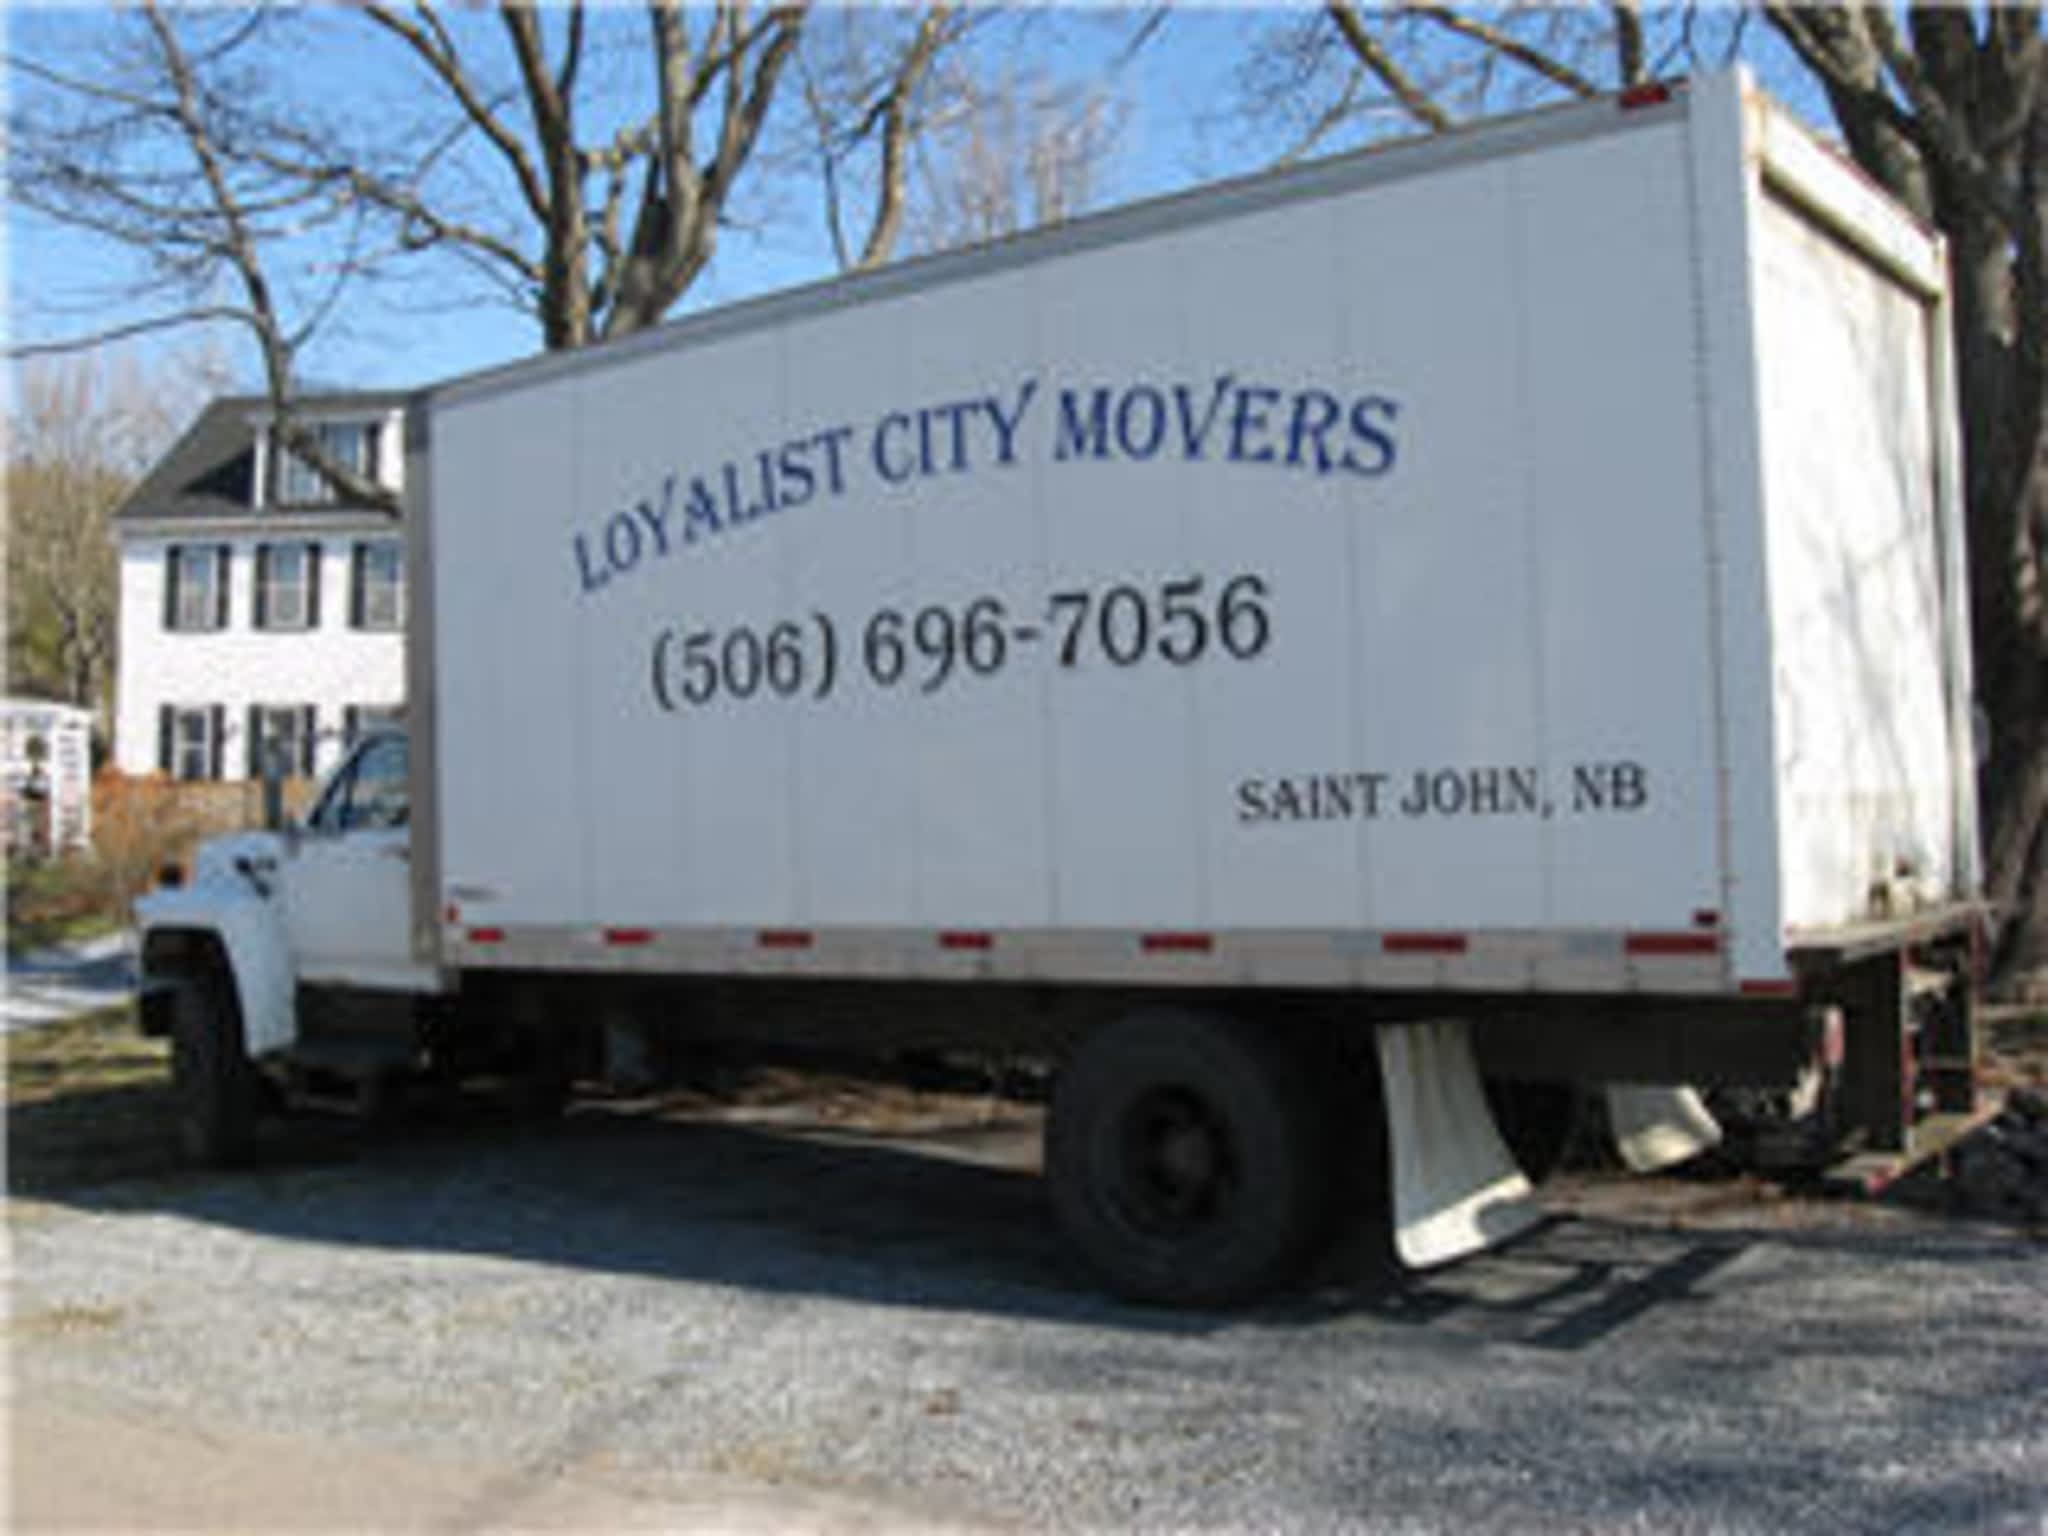 photo Loyalist City Movers